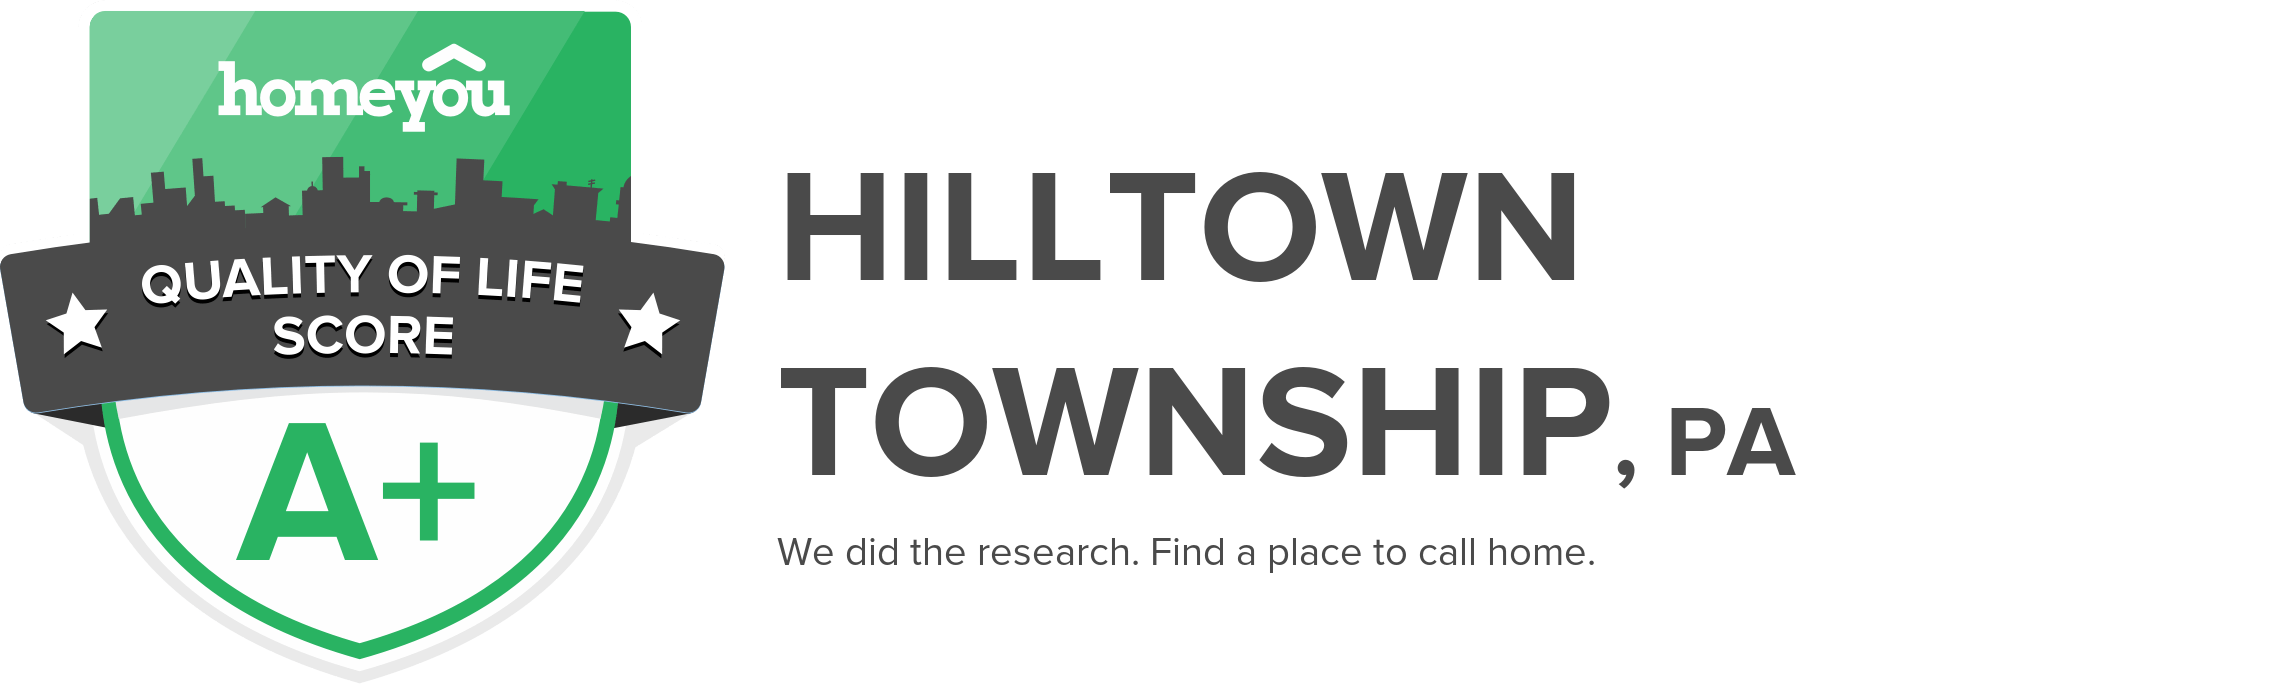 Hilltown township, PA